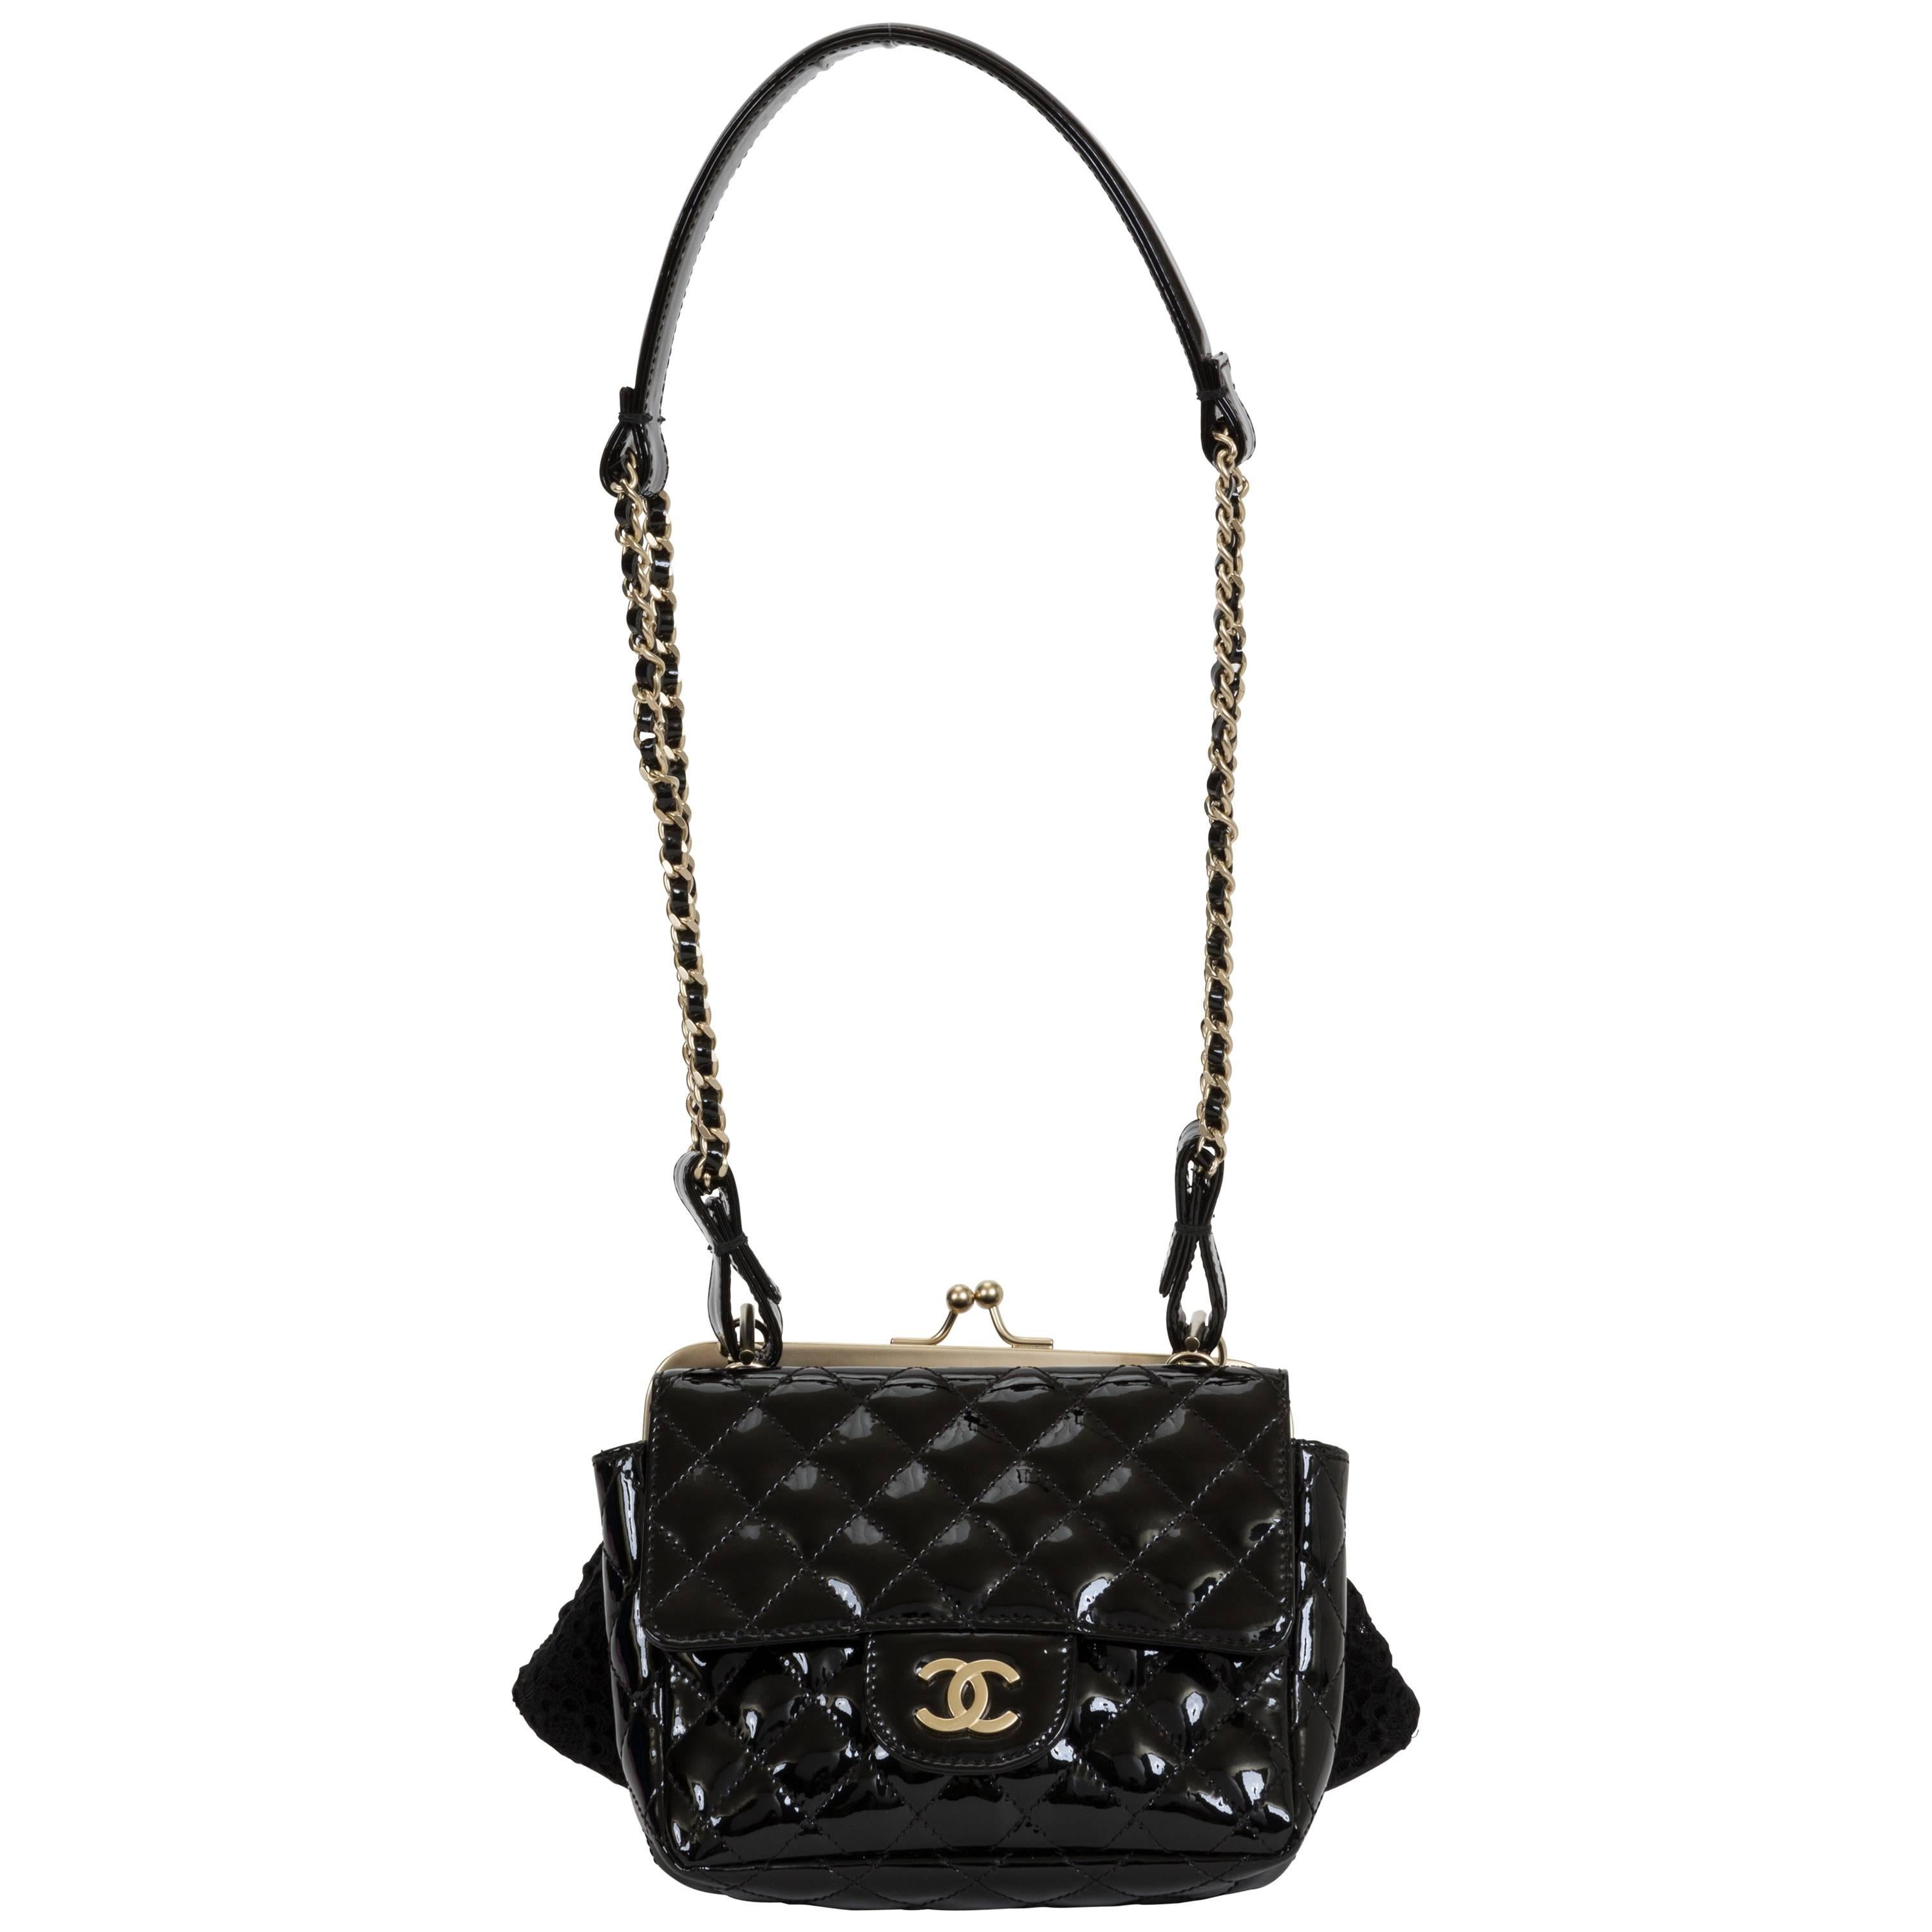 Sold at Auction: Chanel Black Patent Leather Kiss Lock Shoulder Bag